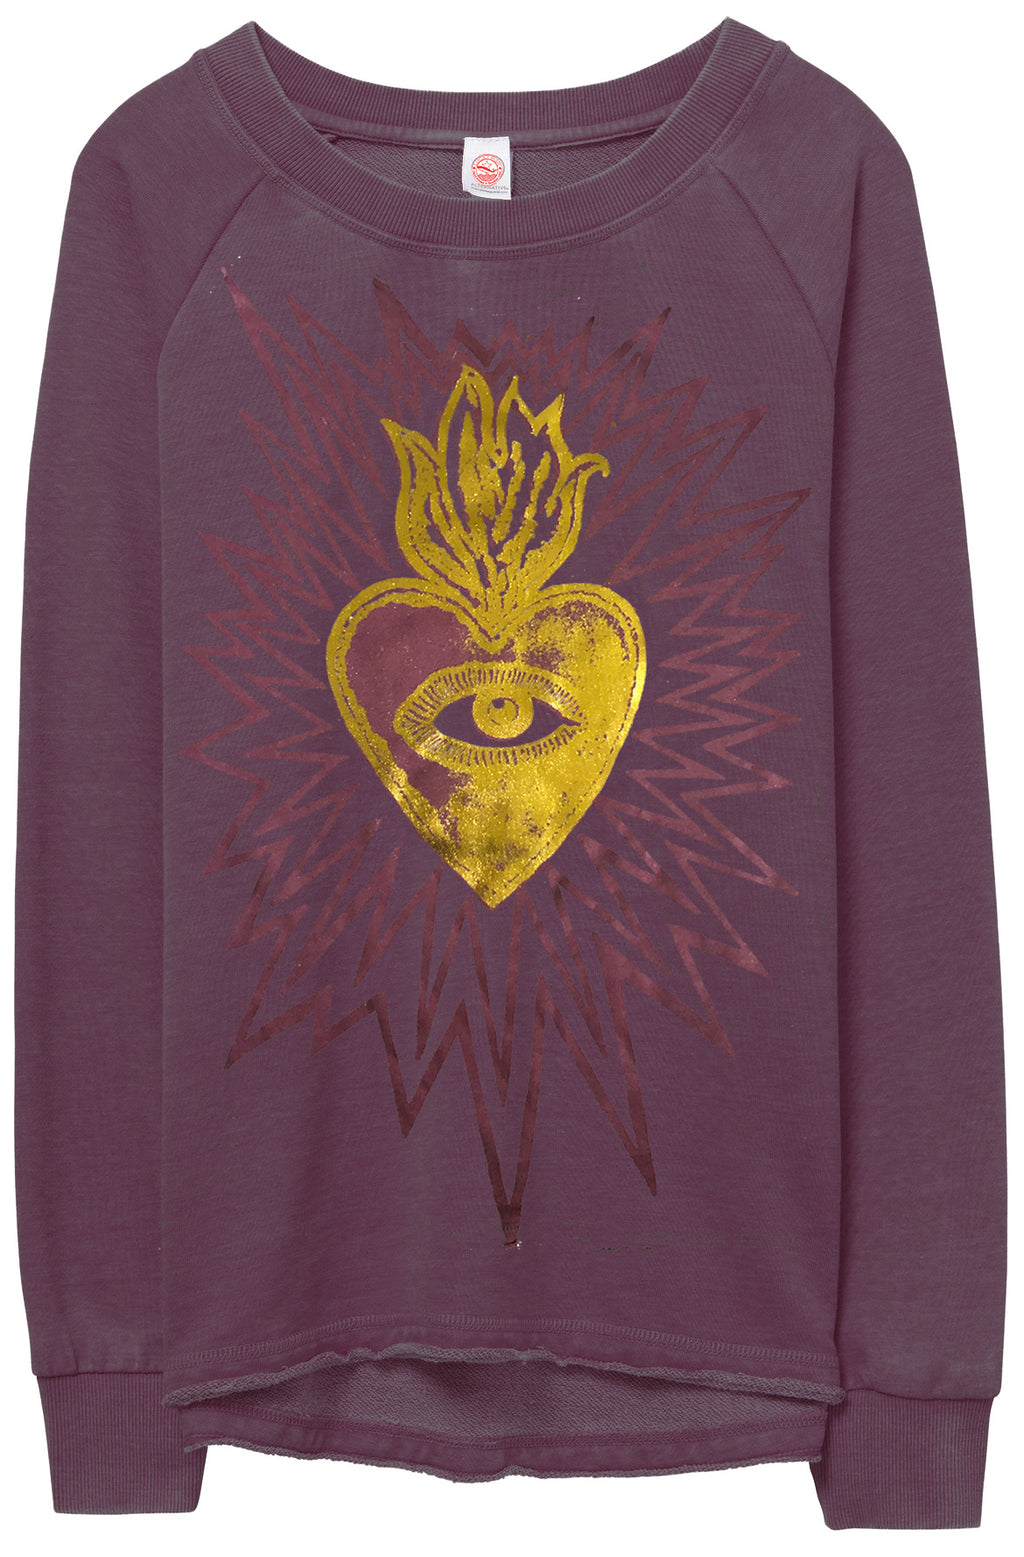 Burning Heart in Golden Metallic on a Purple Burnout sweatshirt.